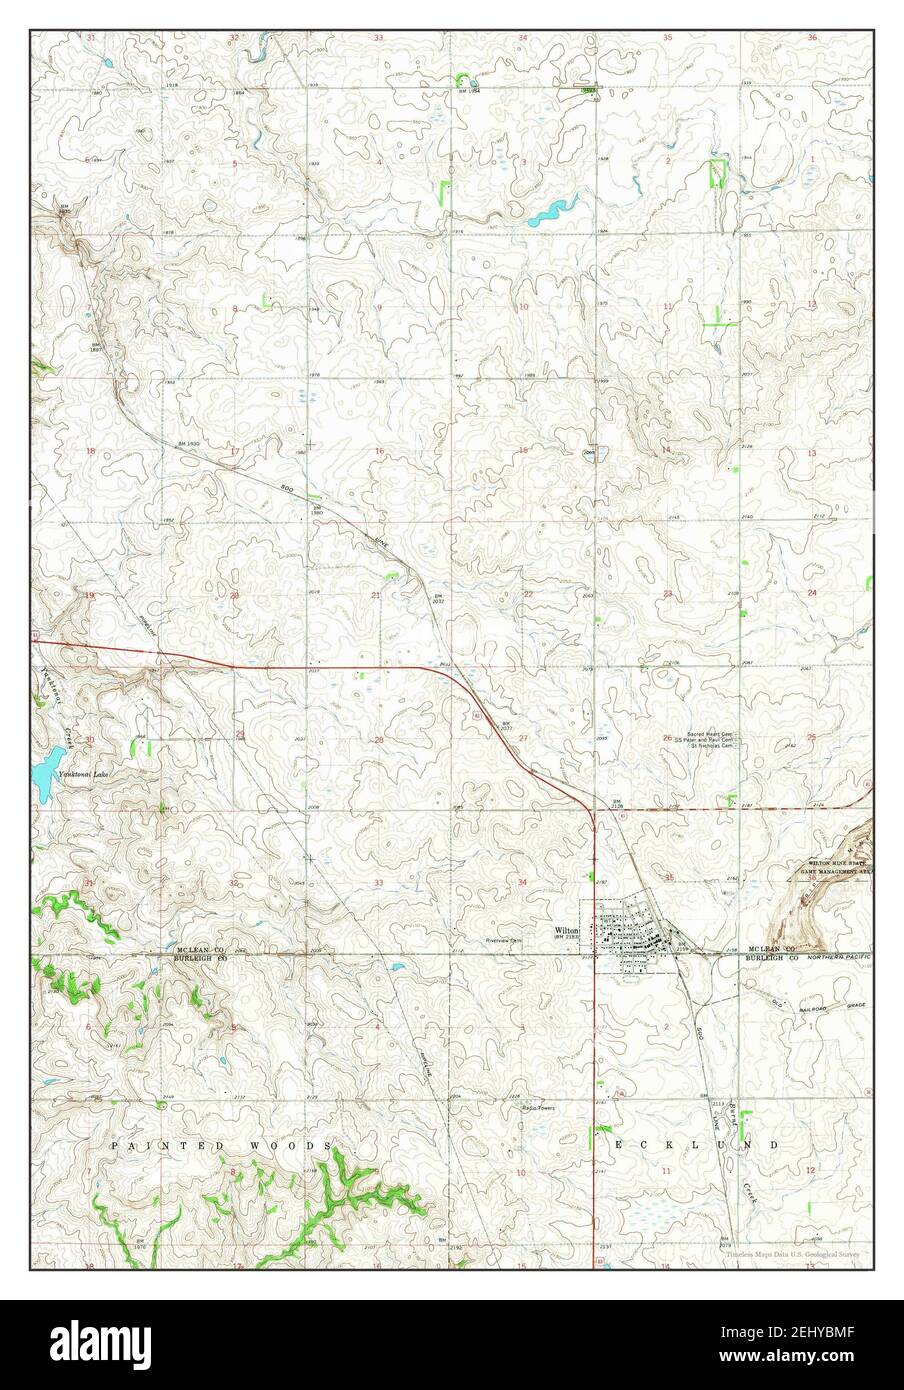 St Paul Park, Minnesota, map 1950, 1:24000, United States of America by  Timeless Maps, data U.S. Geological Survey Stock Photo - Alamy